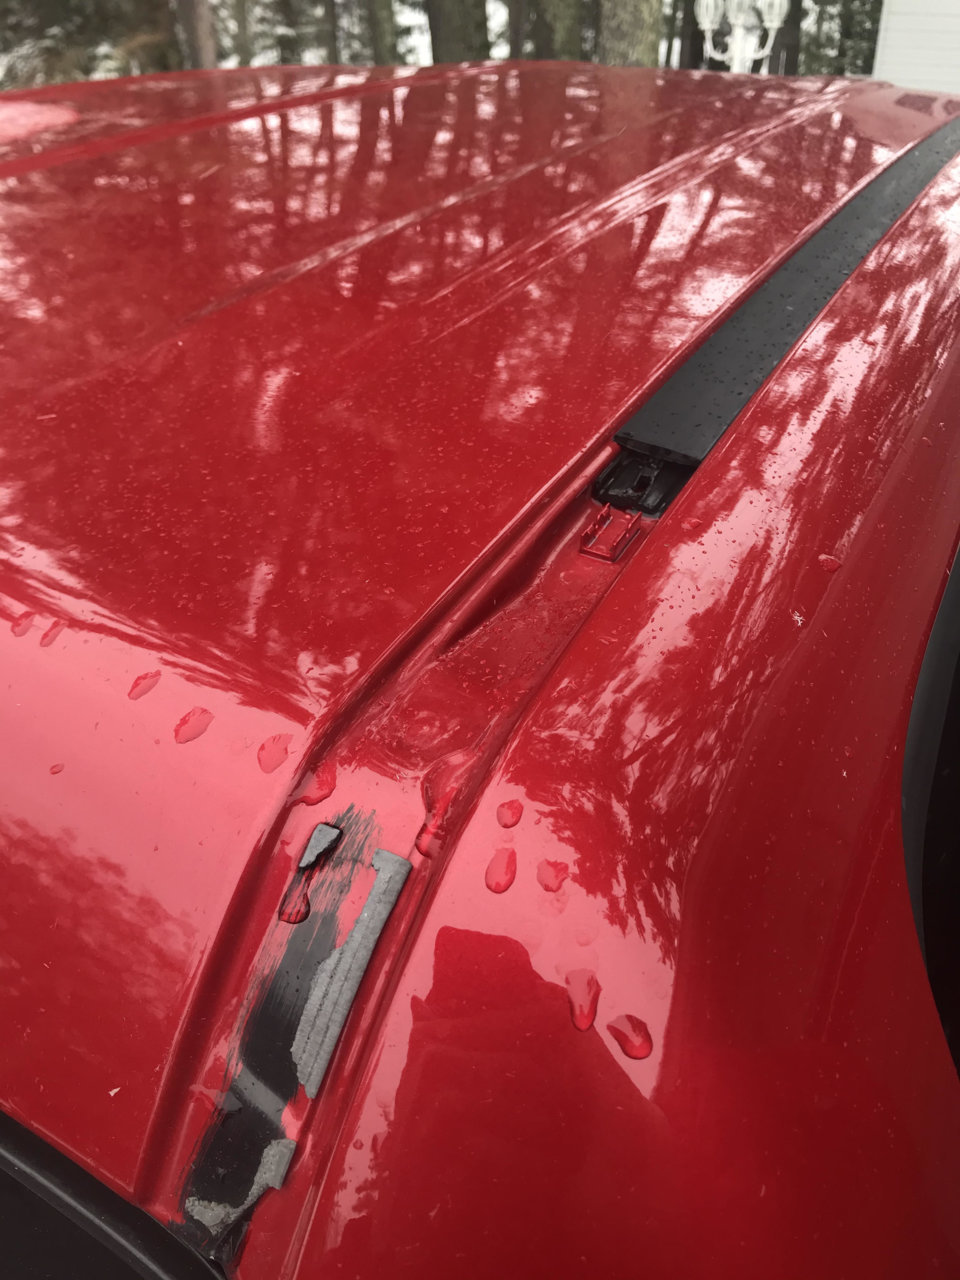 2020 Tundra roof trim fell off | Toyota Tundra Forum